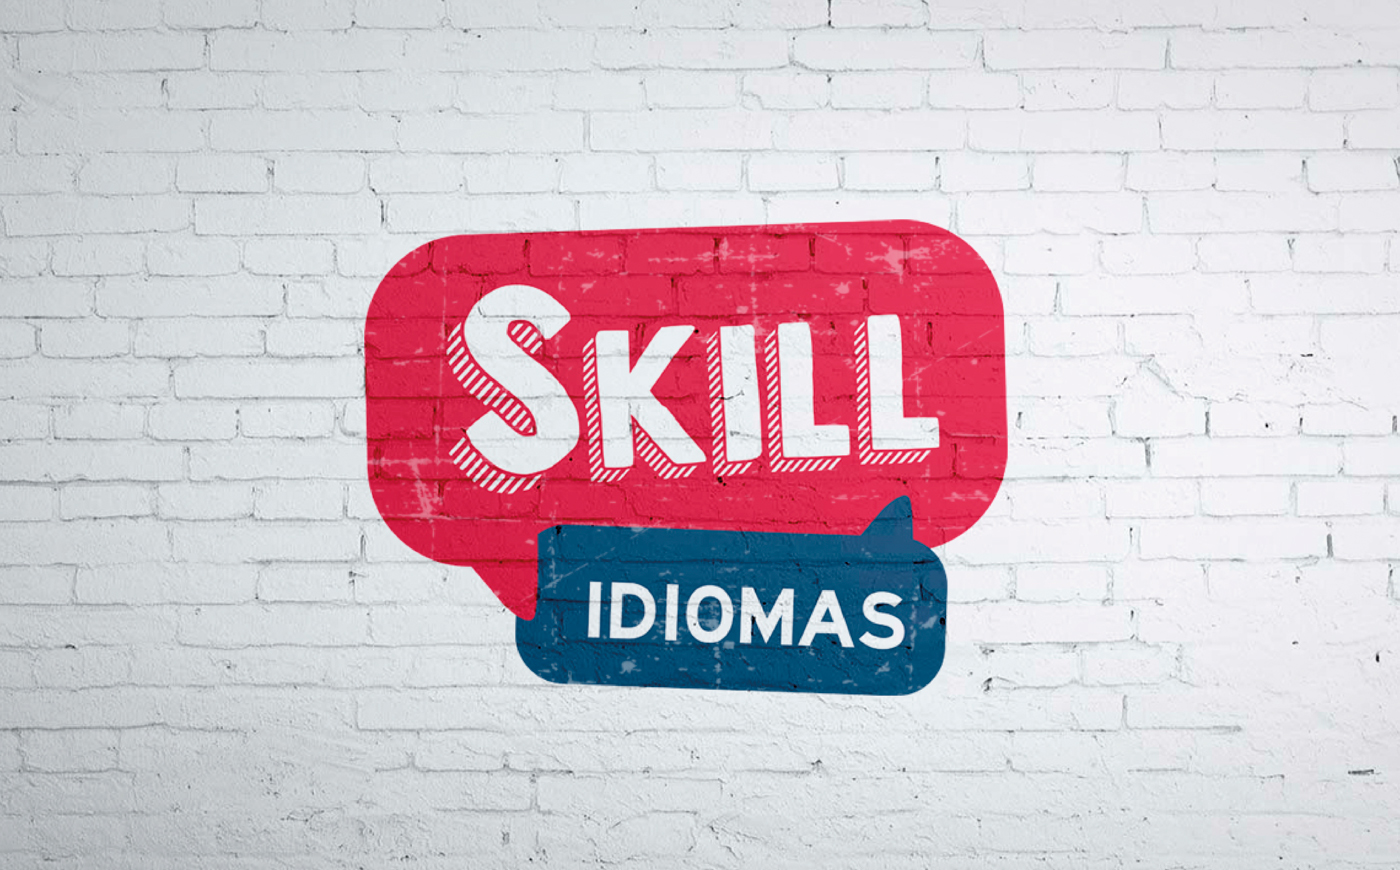 Skill Idiomas Pearson rebrading esamc graphic design  campinas Sorocaba language school english